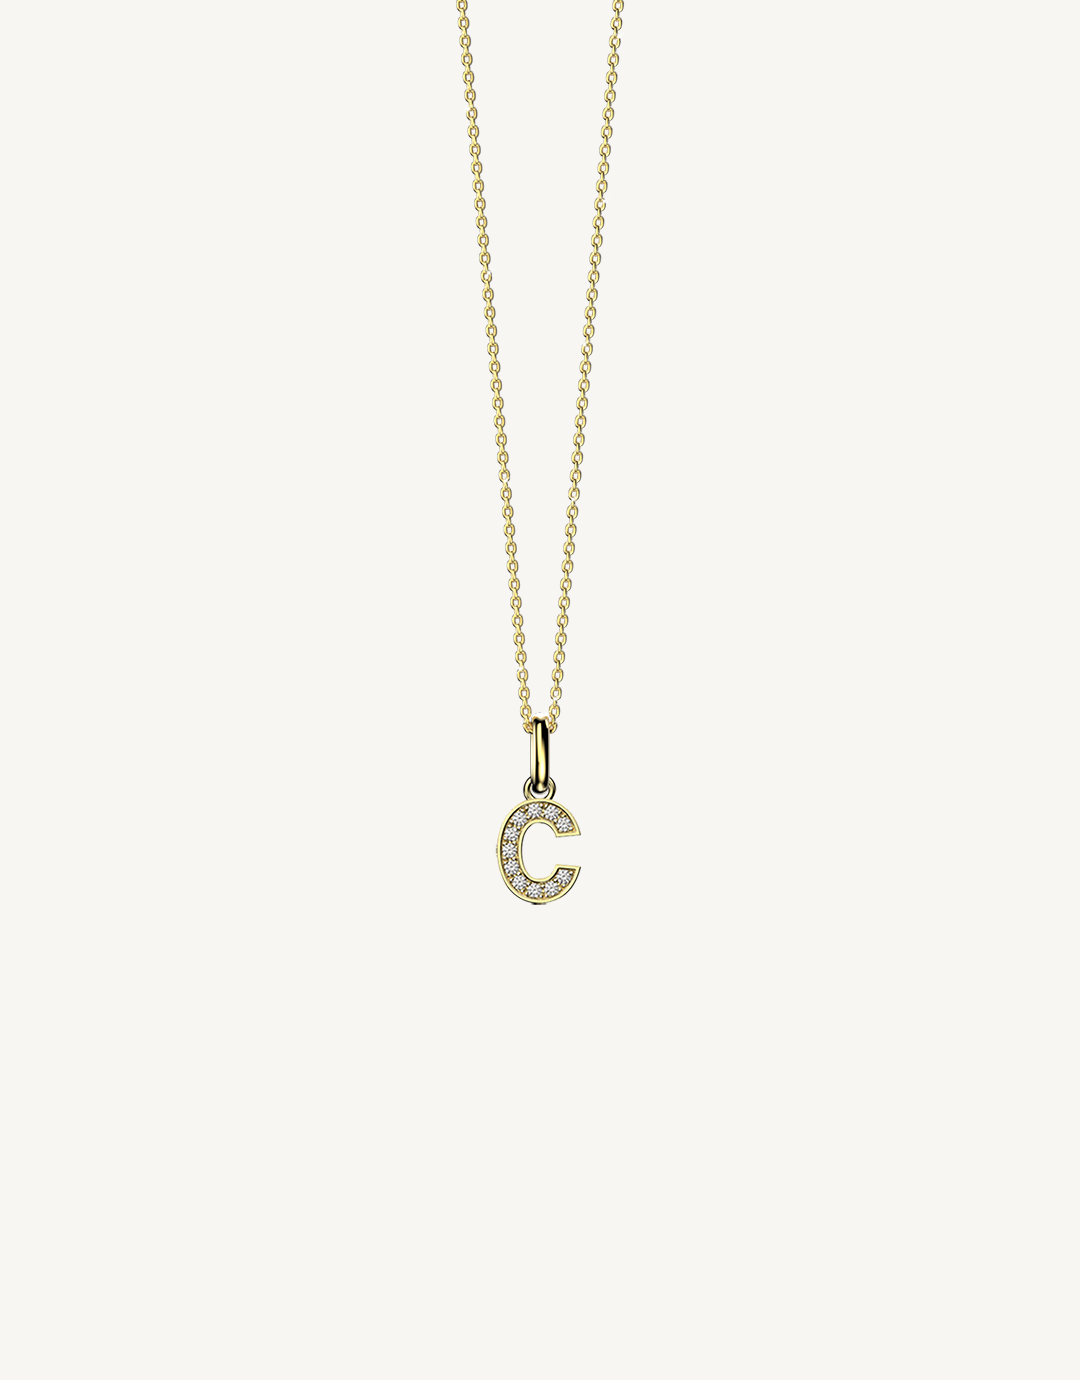 18k yellow gold diamond initial pendant. Luxury custom design. Initial C.